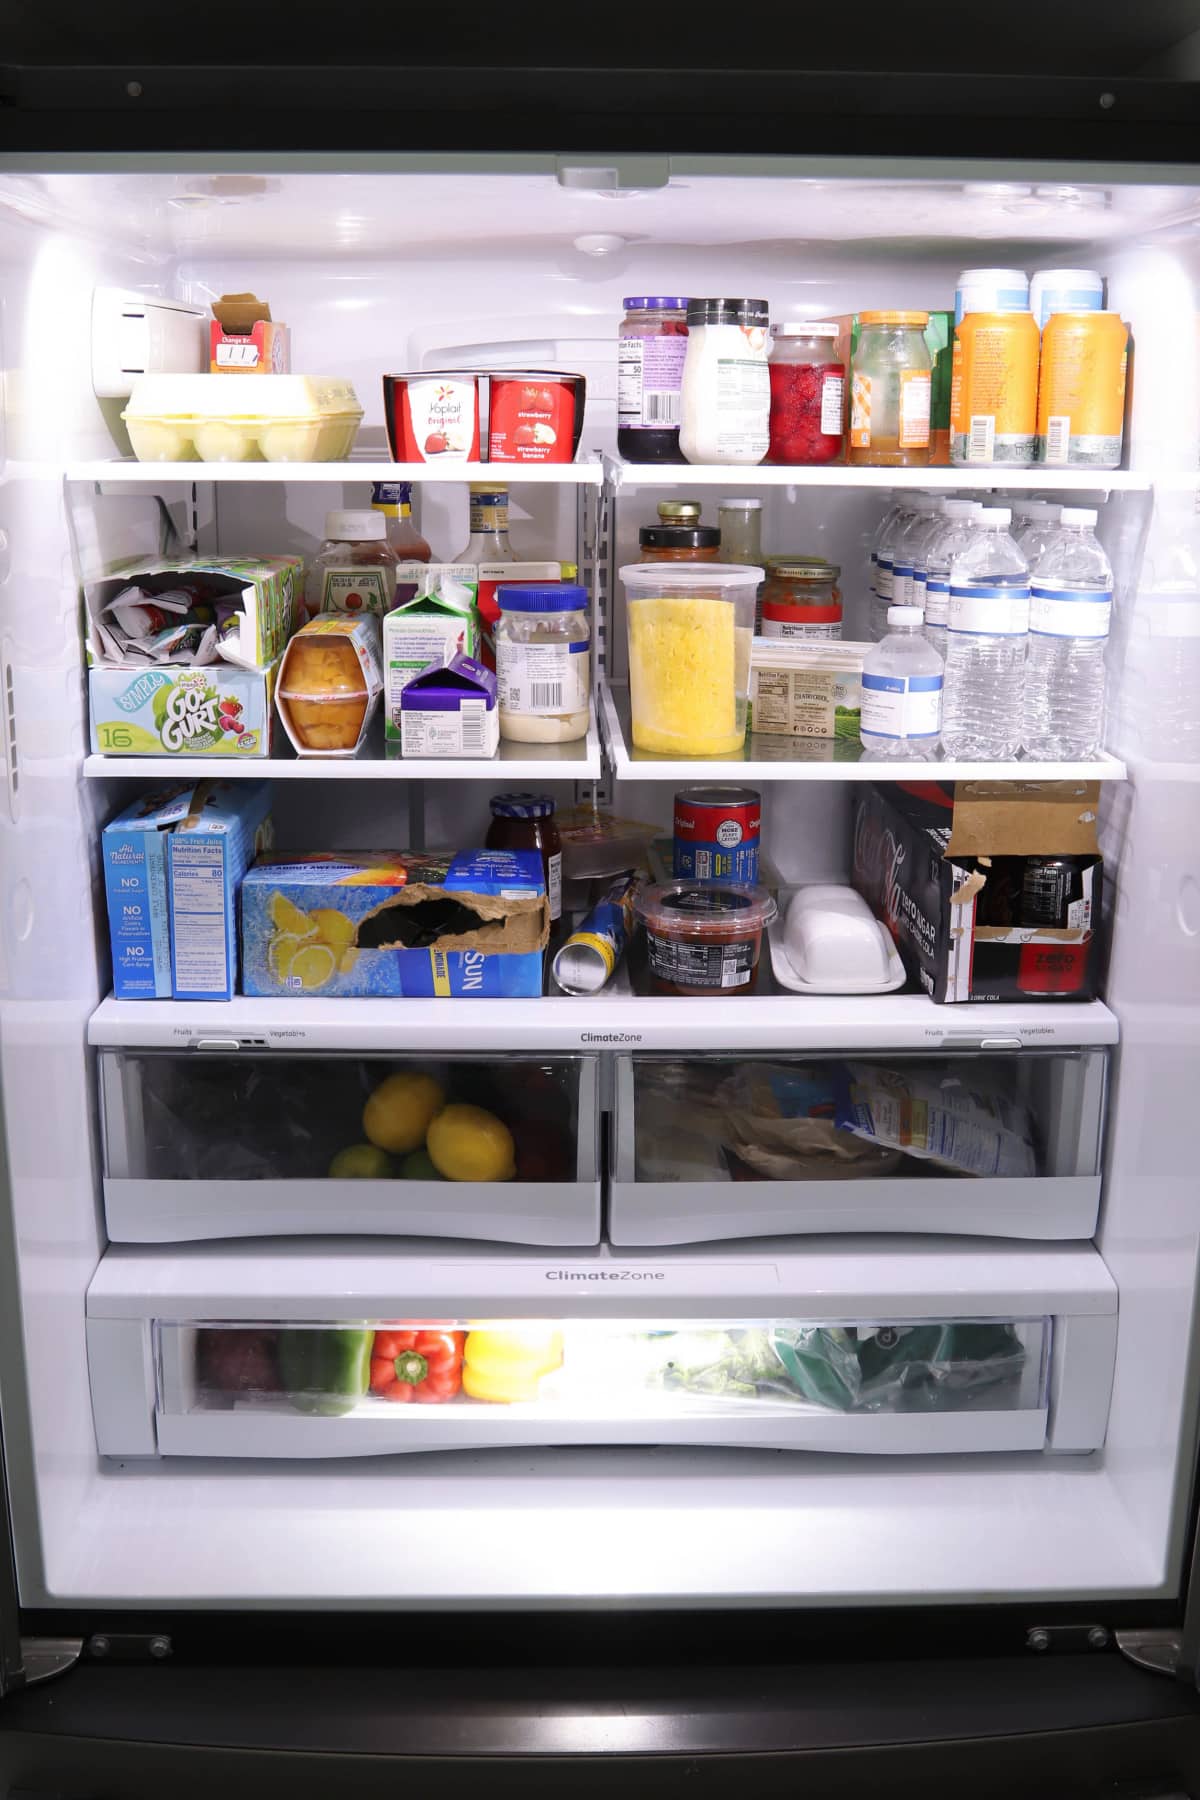 Messy refrigerator